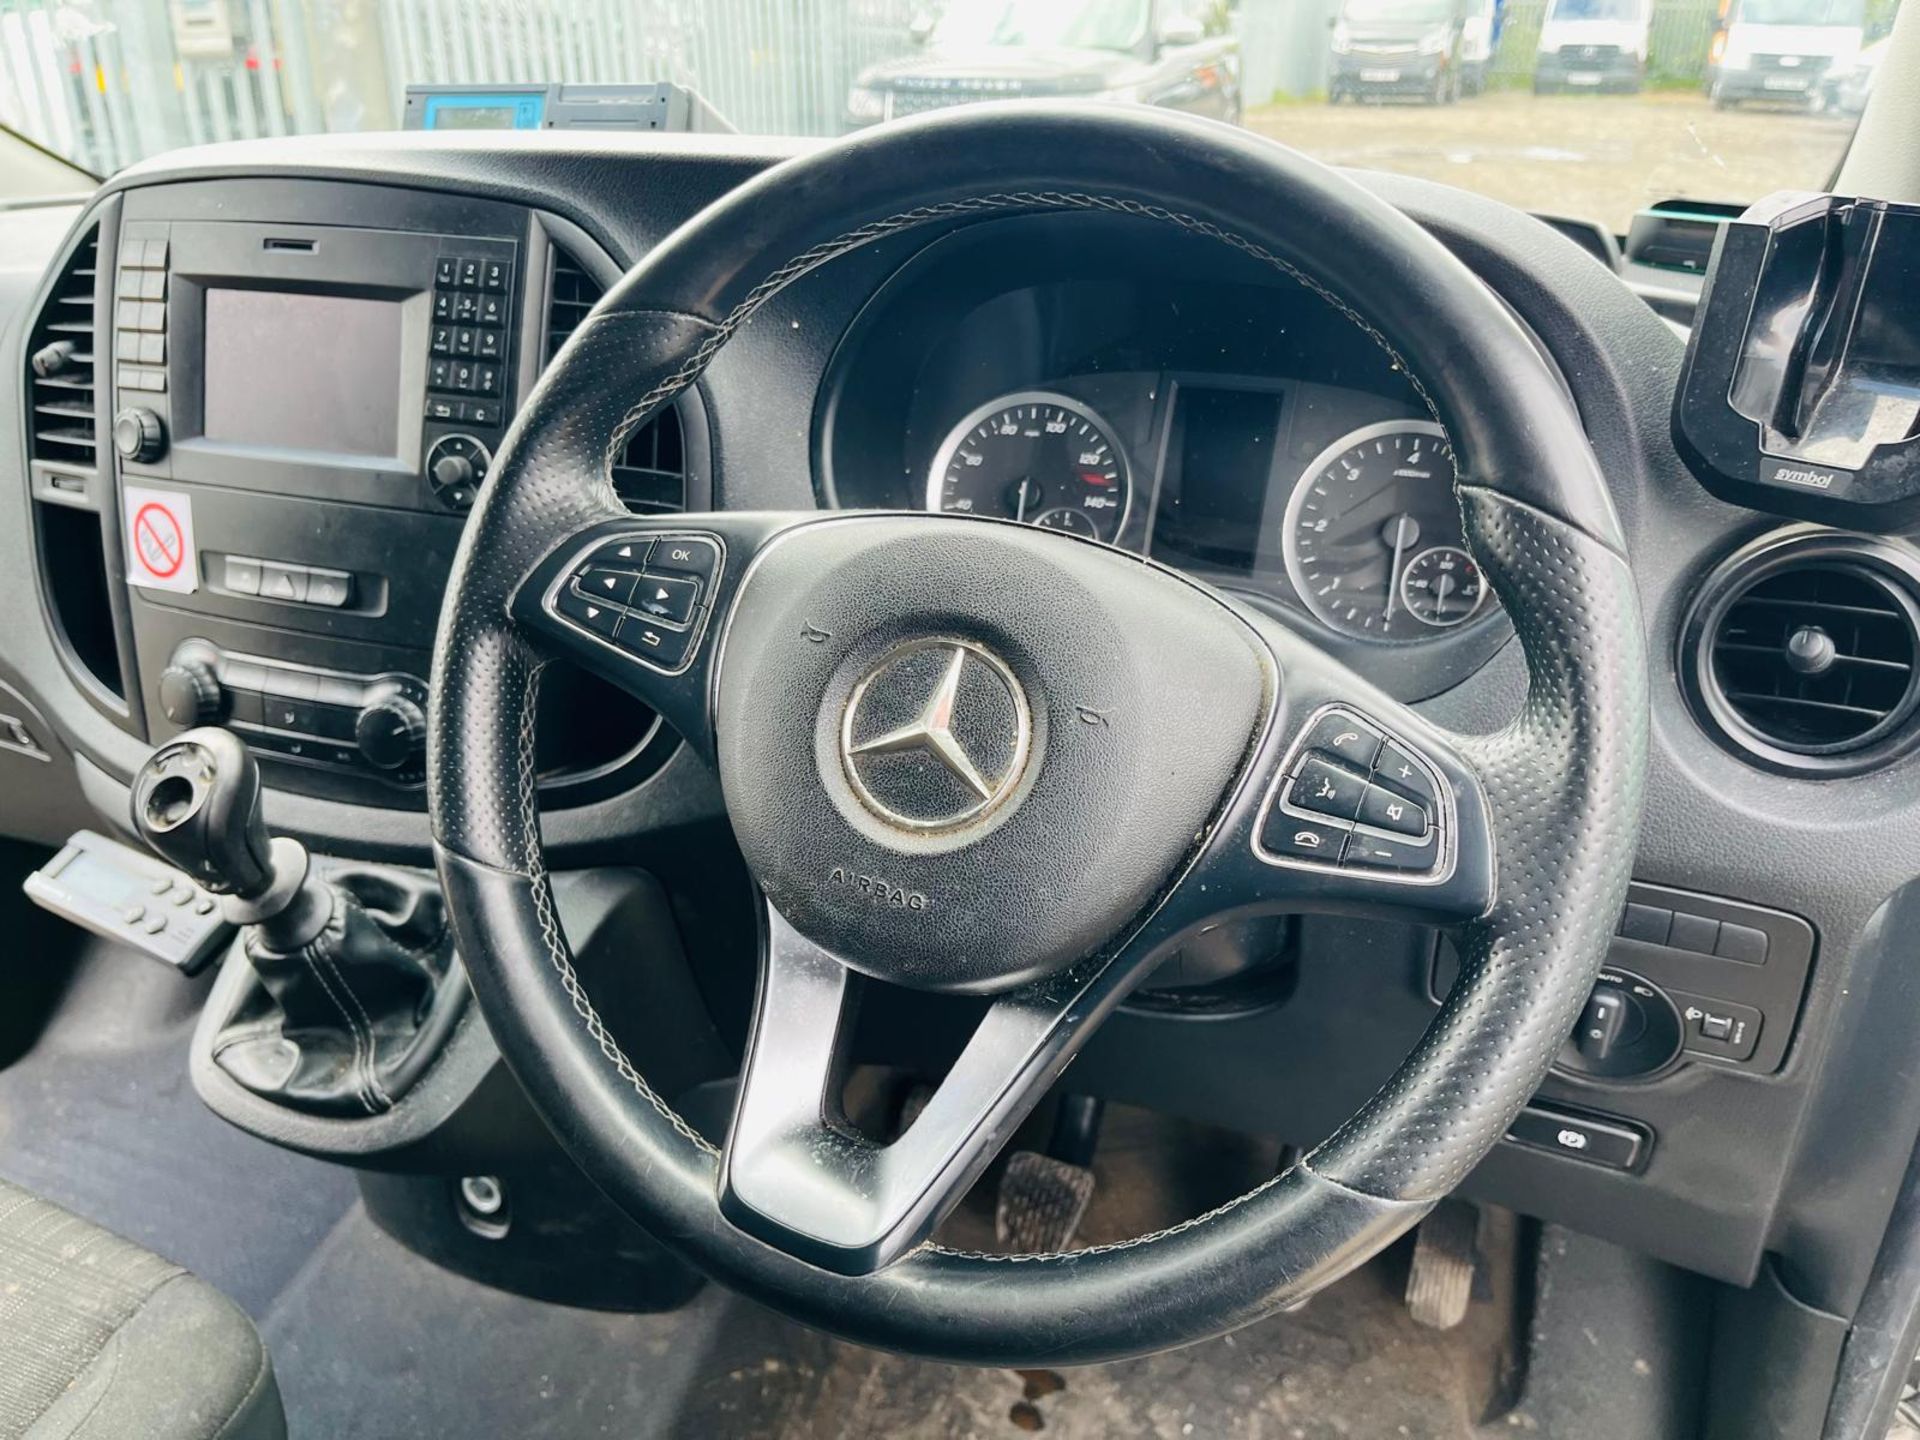 Mercedes Benz Vito 2.1 114 CDI RWD Fridge/Freezer 2019 '19 Reg '-ULEZ Compliant-Parking Sensors-A/C - Image 19 of 27